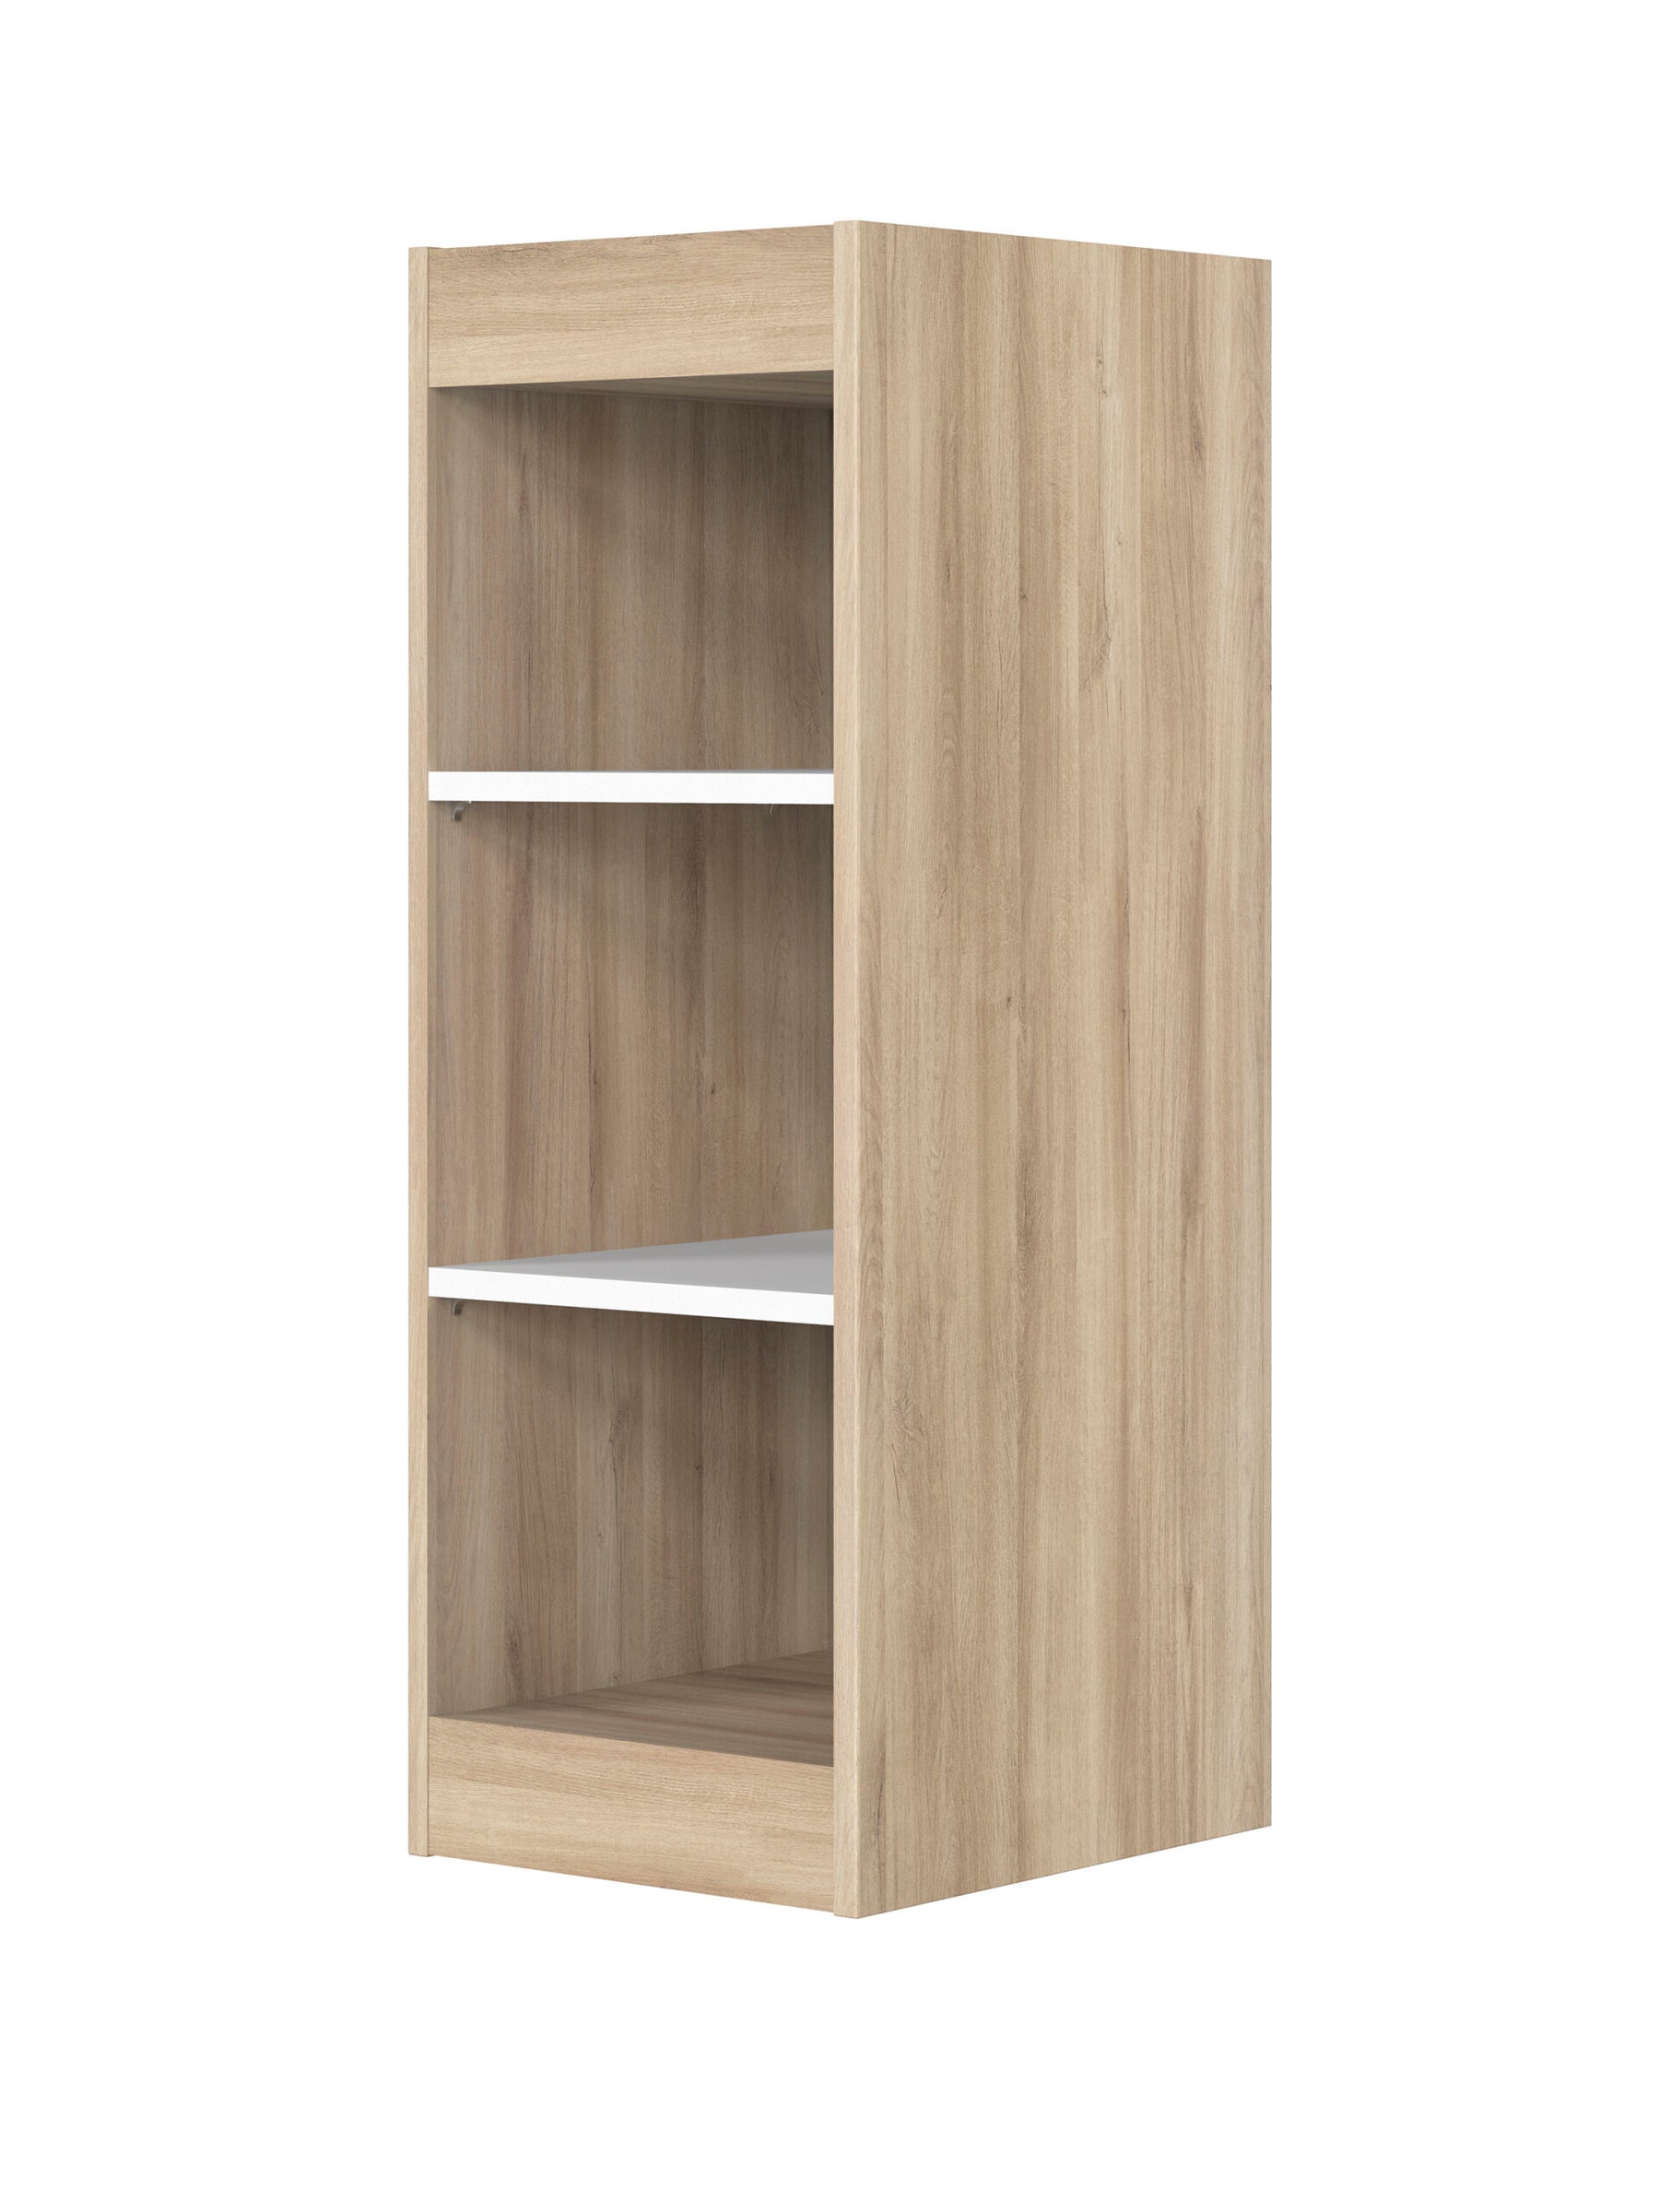 Petite bibliothèque Sacha - GALIPETTE - Cabinets & Storage par Galipette